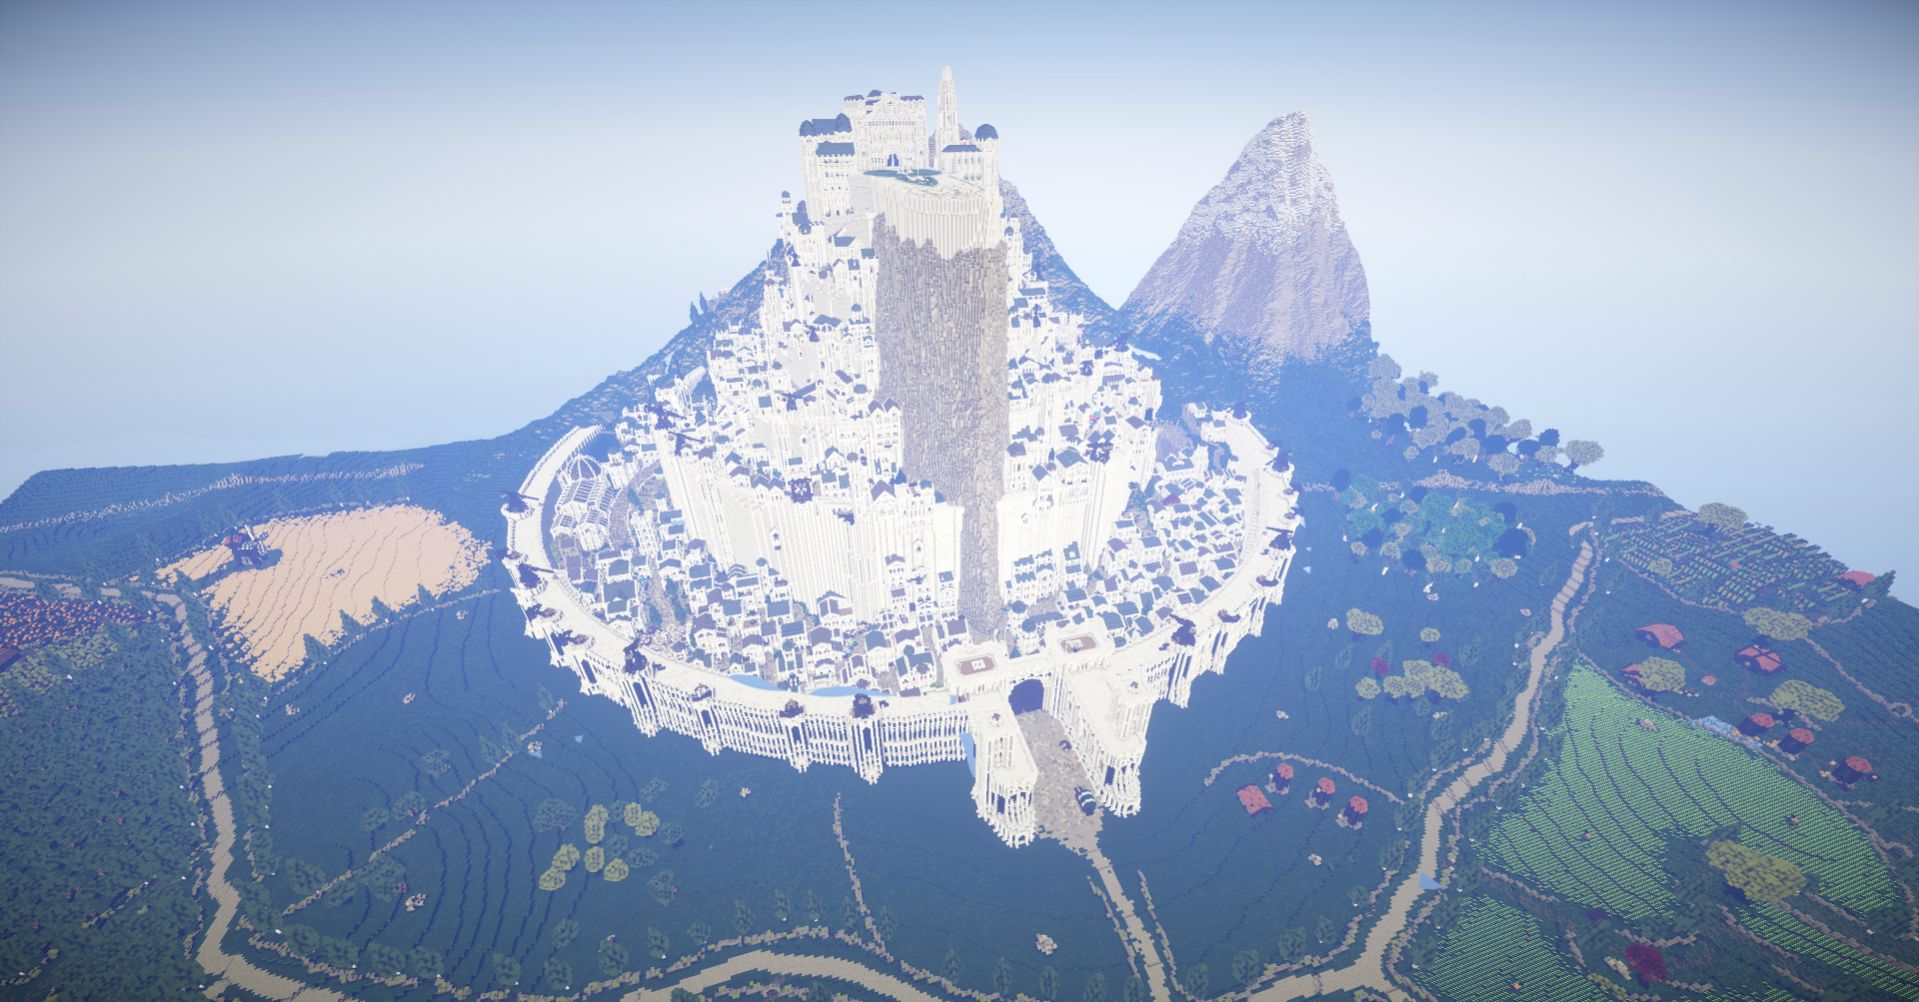 Minecraft Middle Earth: Minas Tirith Minecraft Map